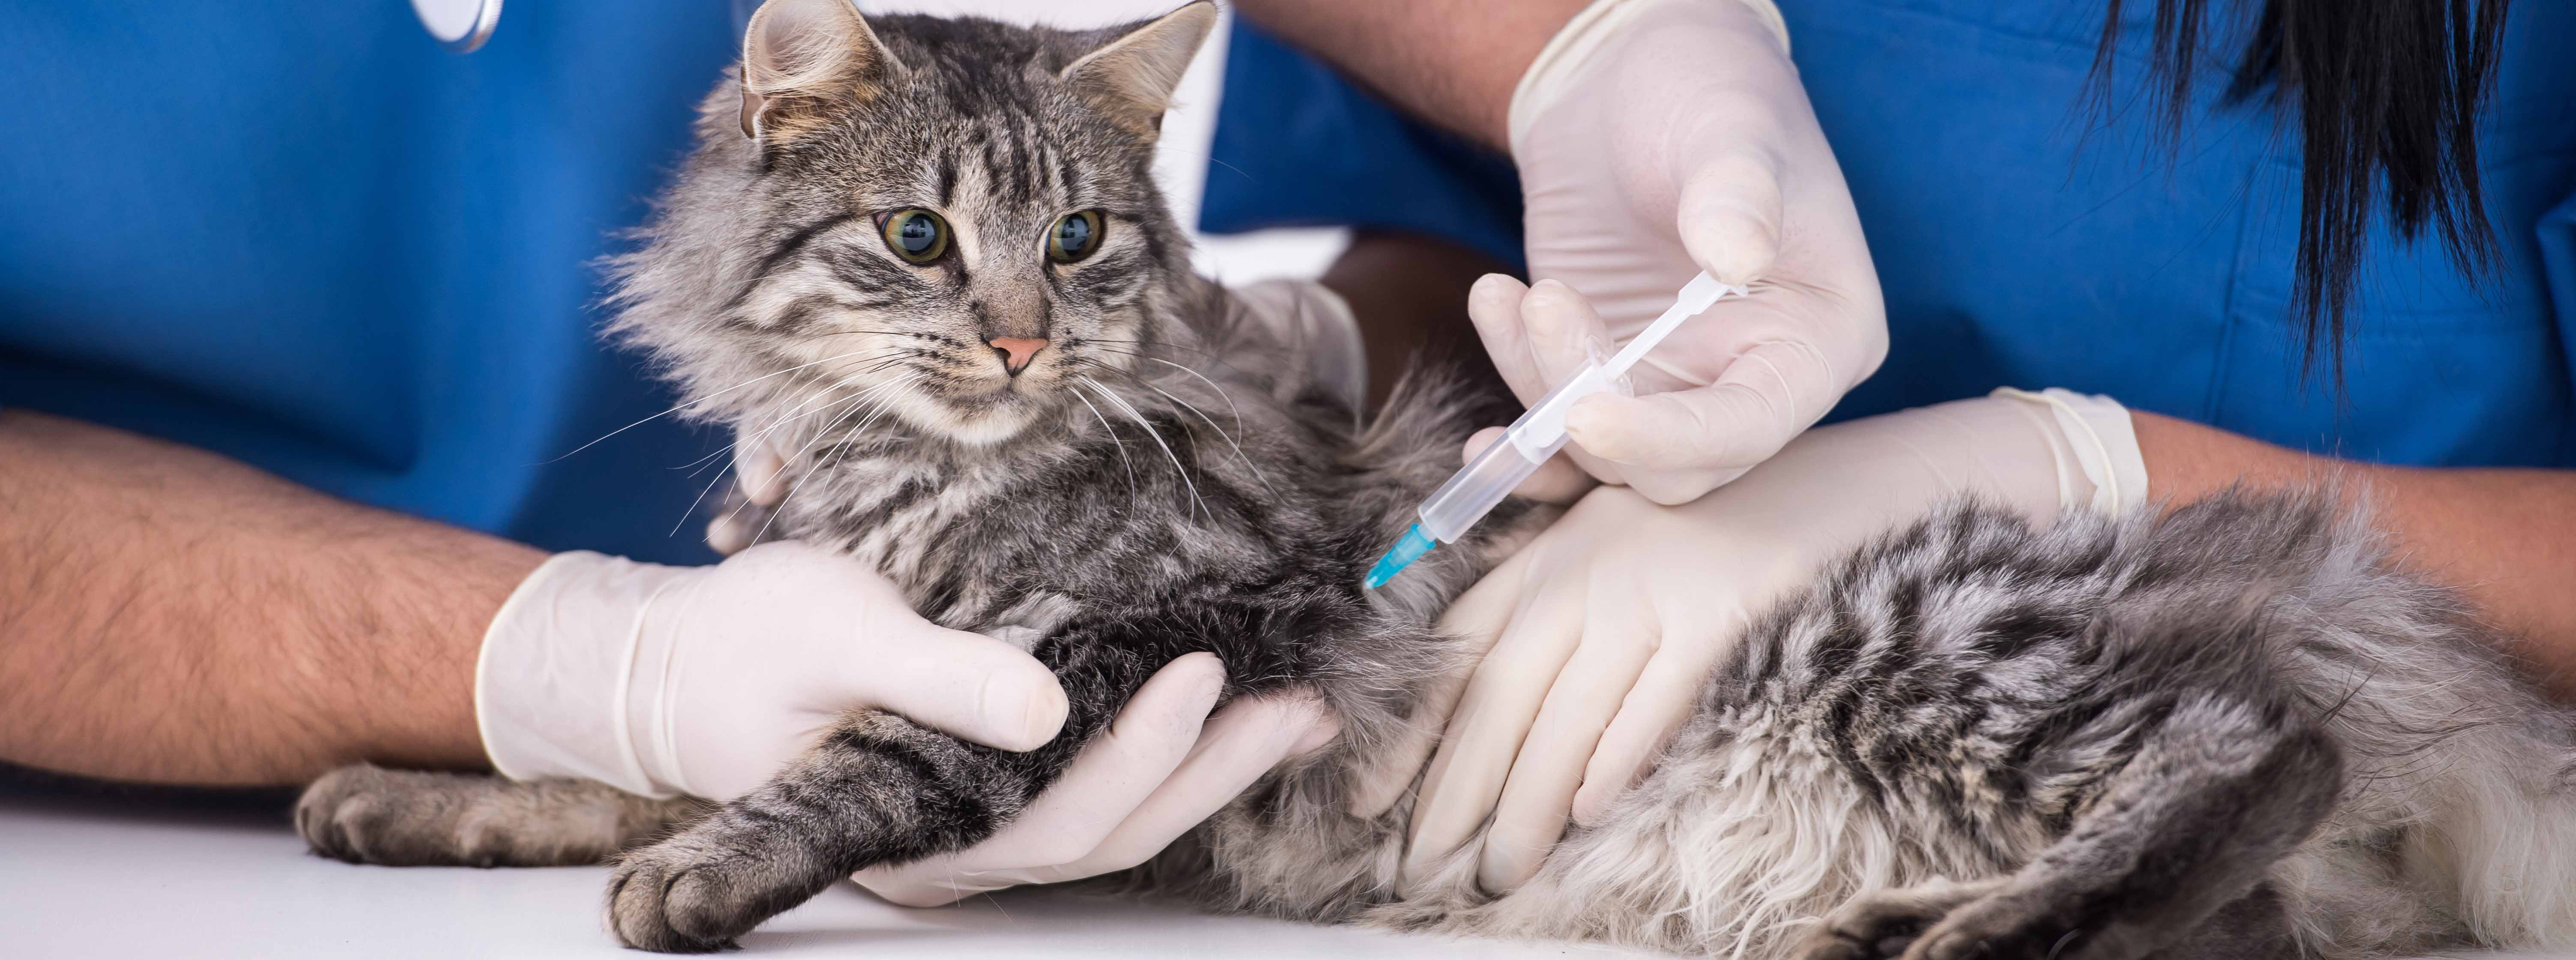 cat vaccination 1 of 1